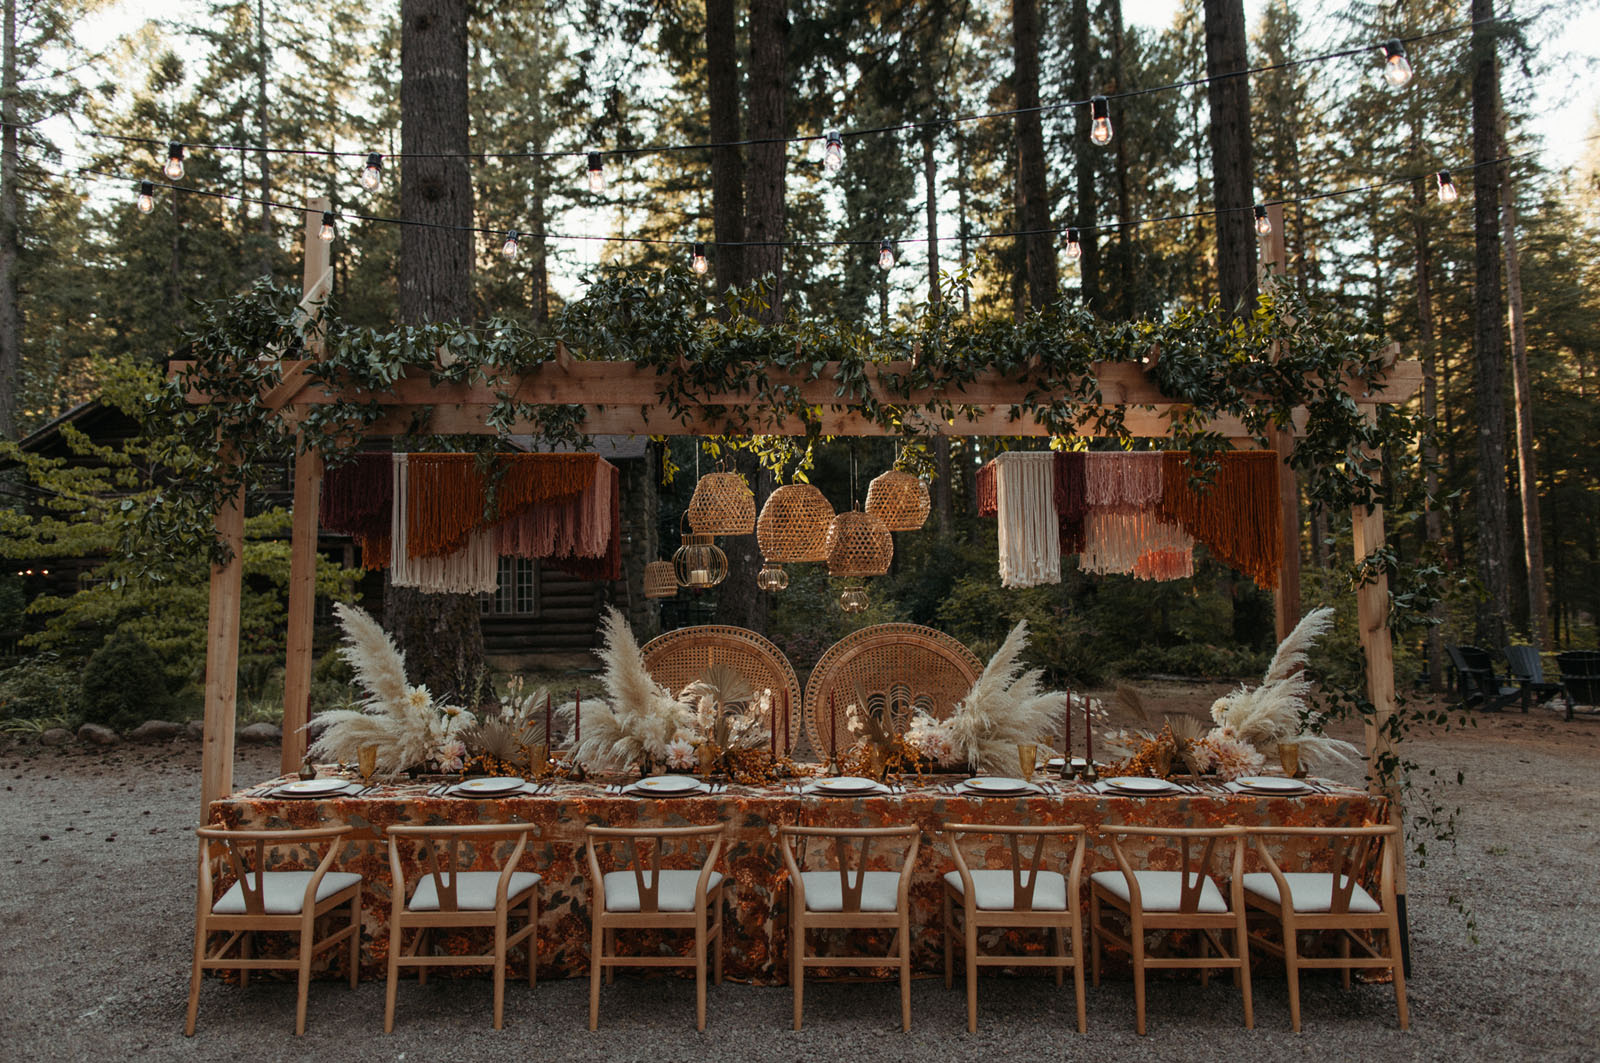 Forest wedding reception